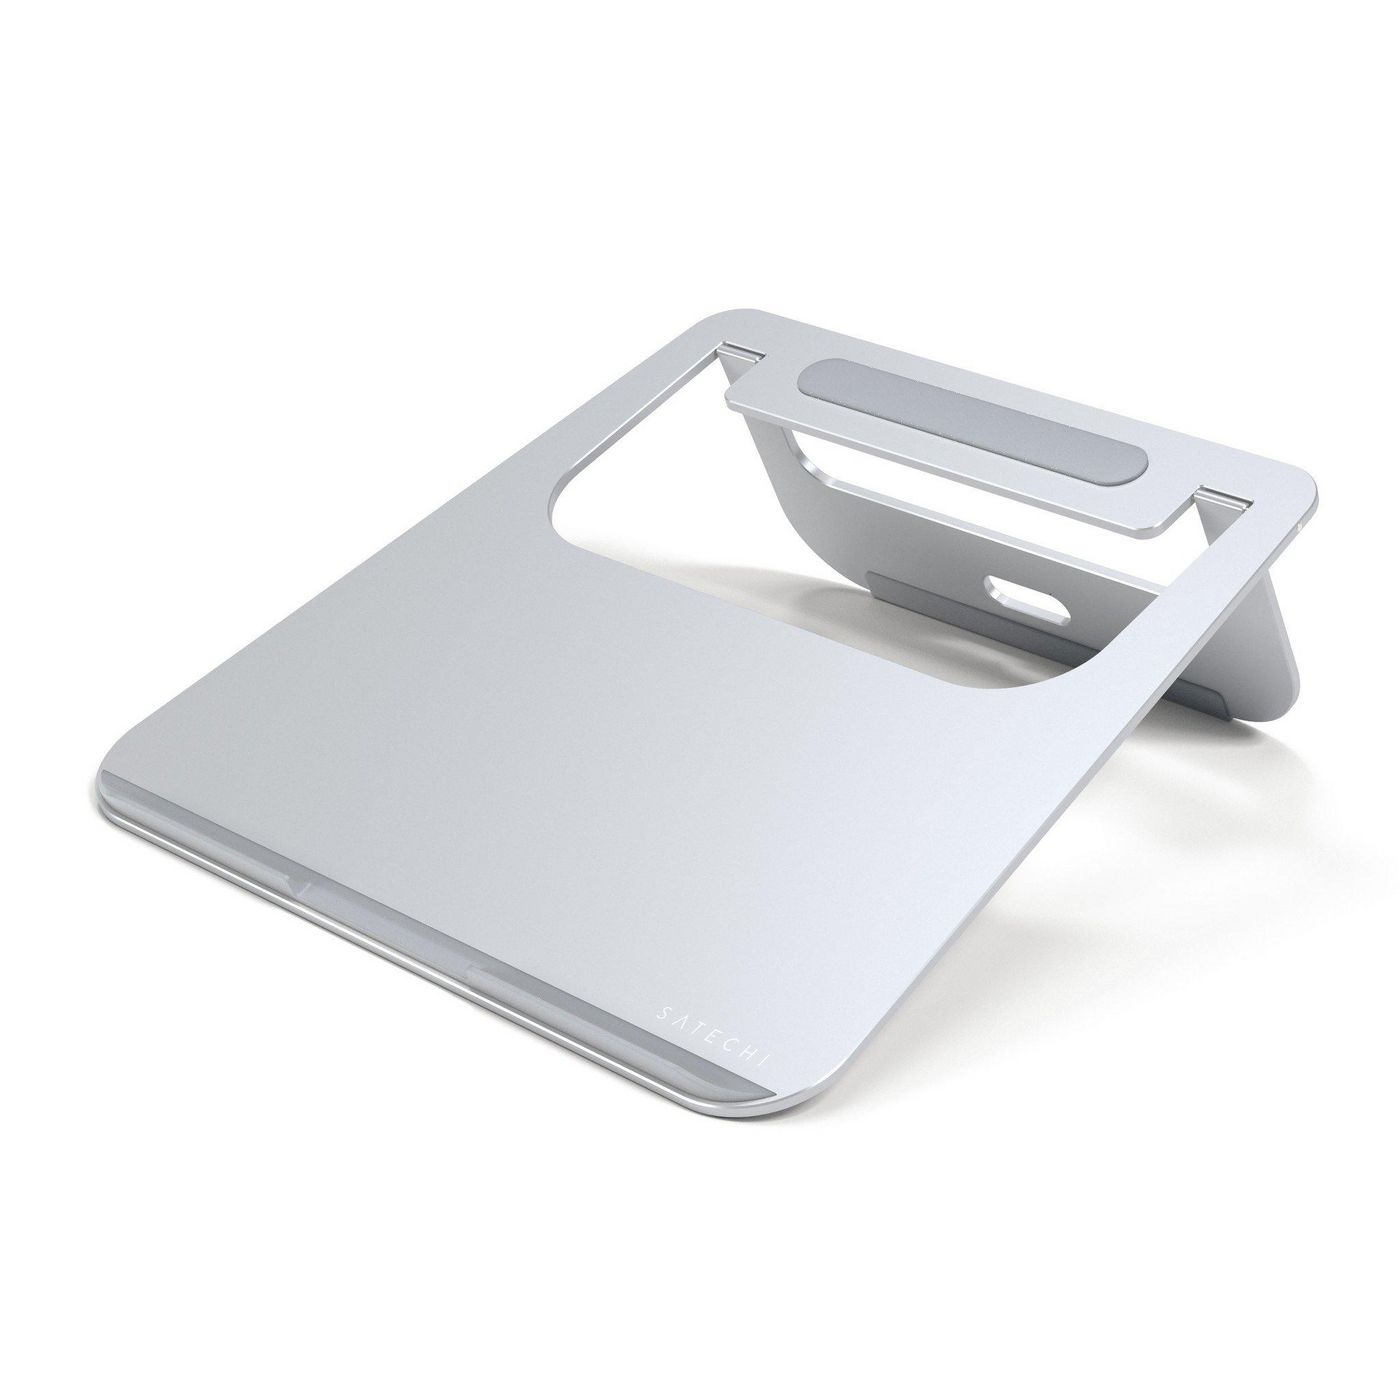 Satechi ST-ALTSS Aluminium Laptop Stand Silver 